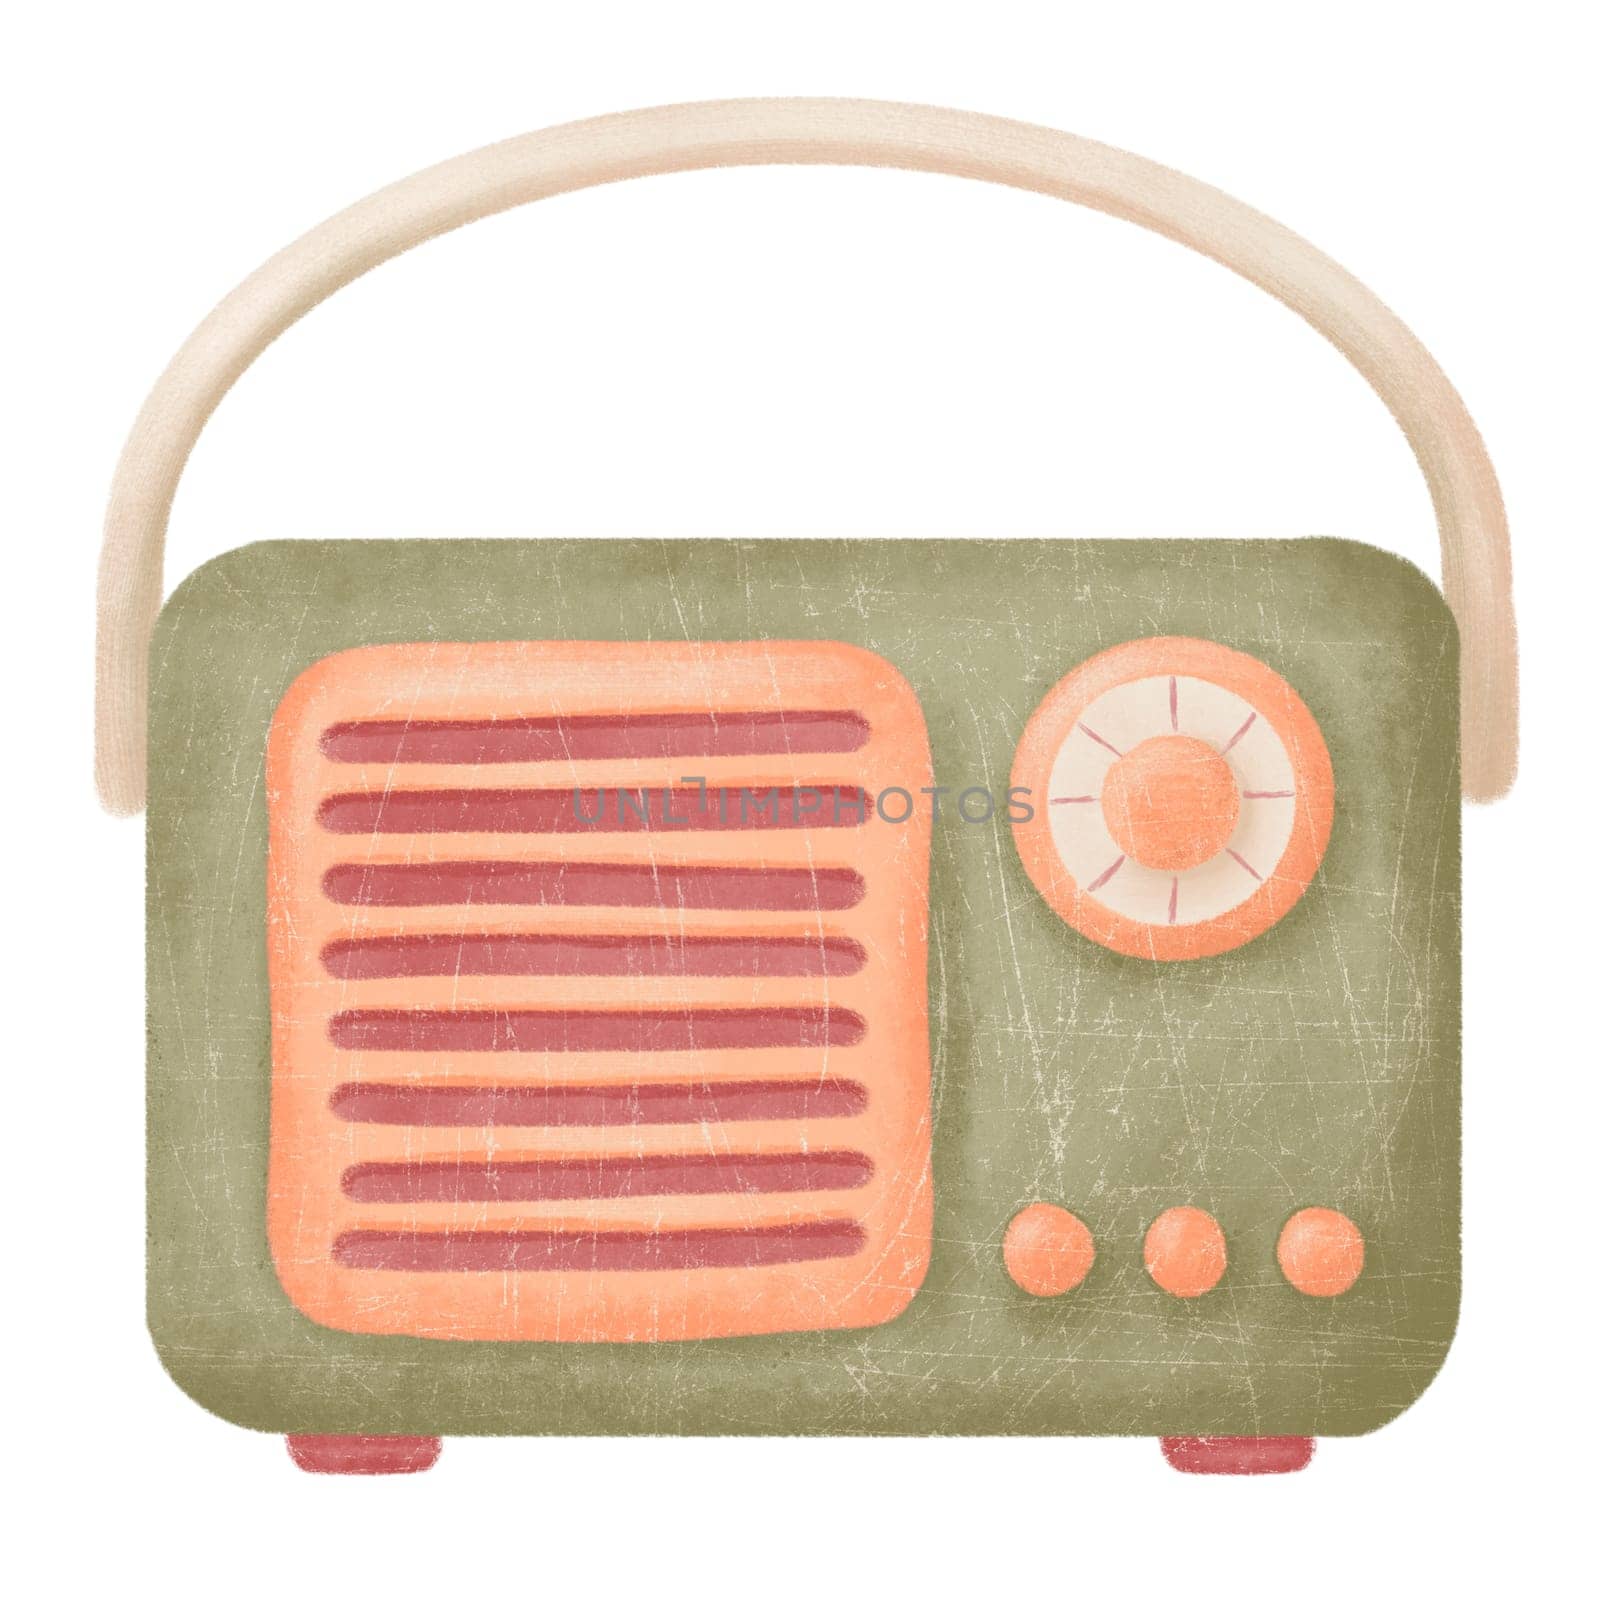 Retro radio in cartoon style. Vintage illustration clipart isolation on white, technology symbol, for print, card, sticker